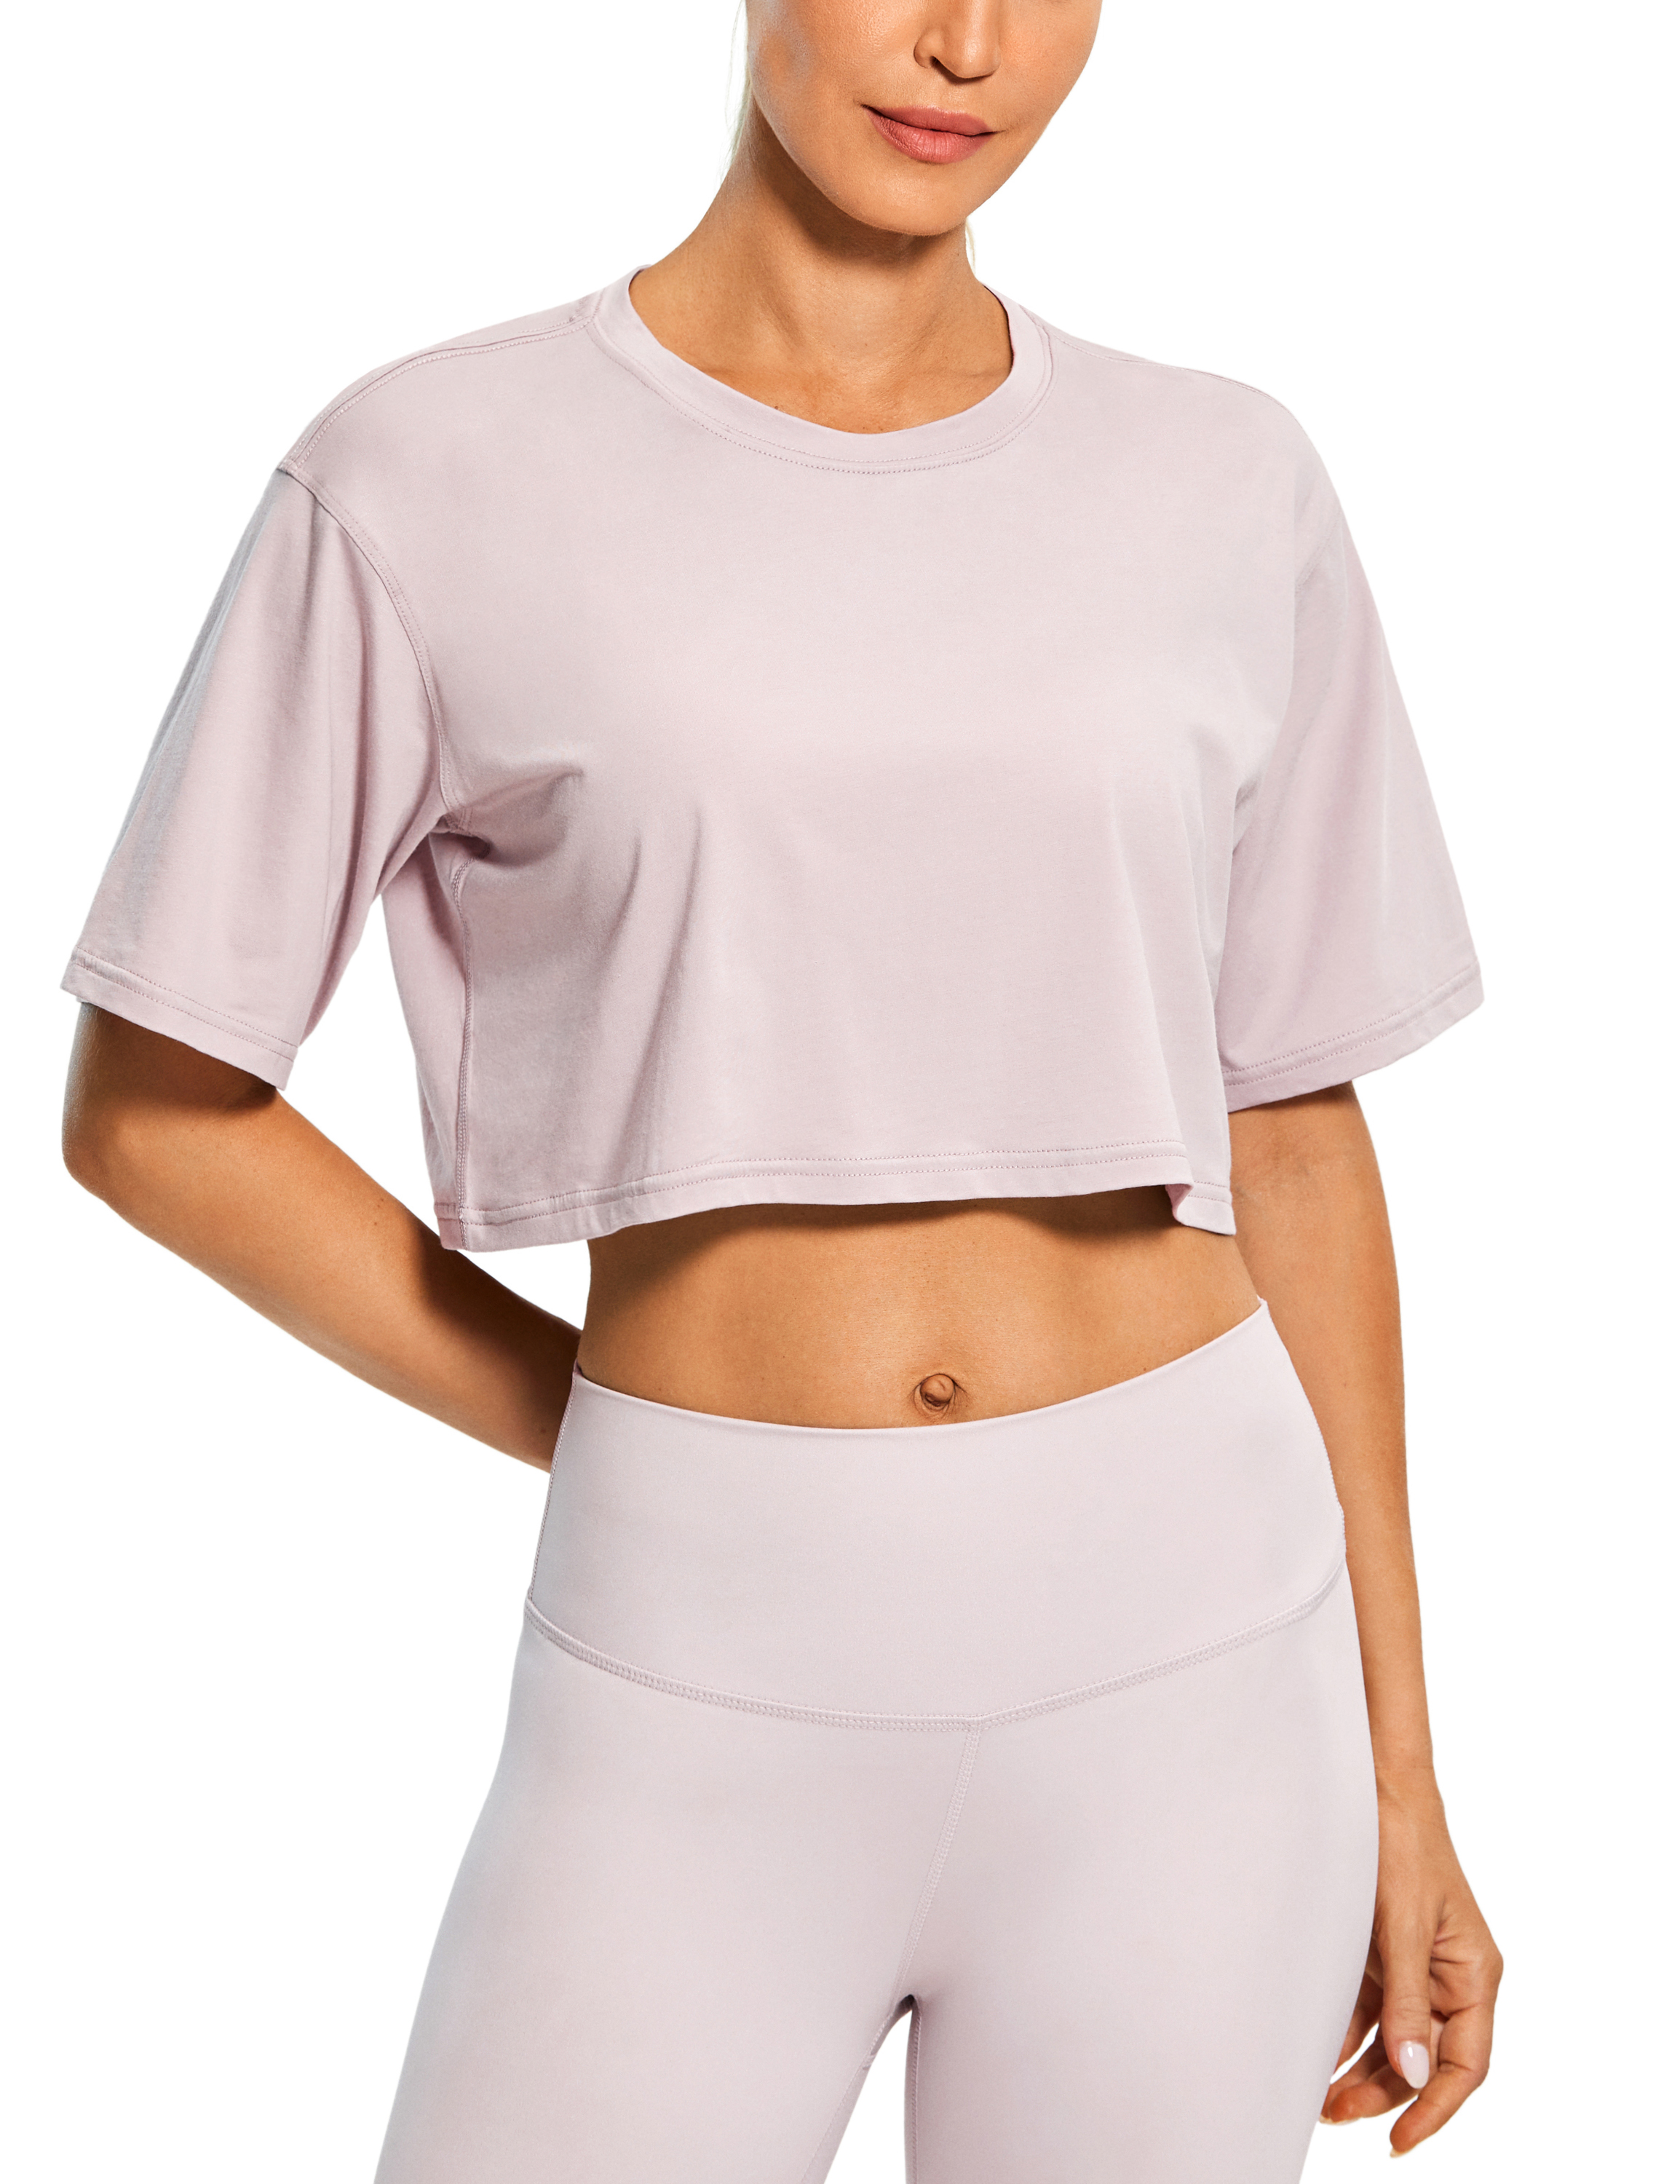 CRZ YOGA Women's Pima Cotton Workout Crop Tops Short Sleeve Running  T-Shirts